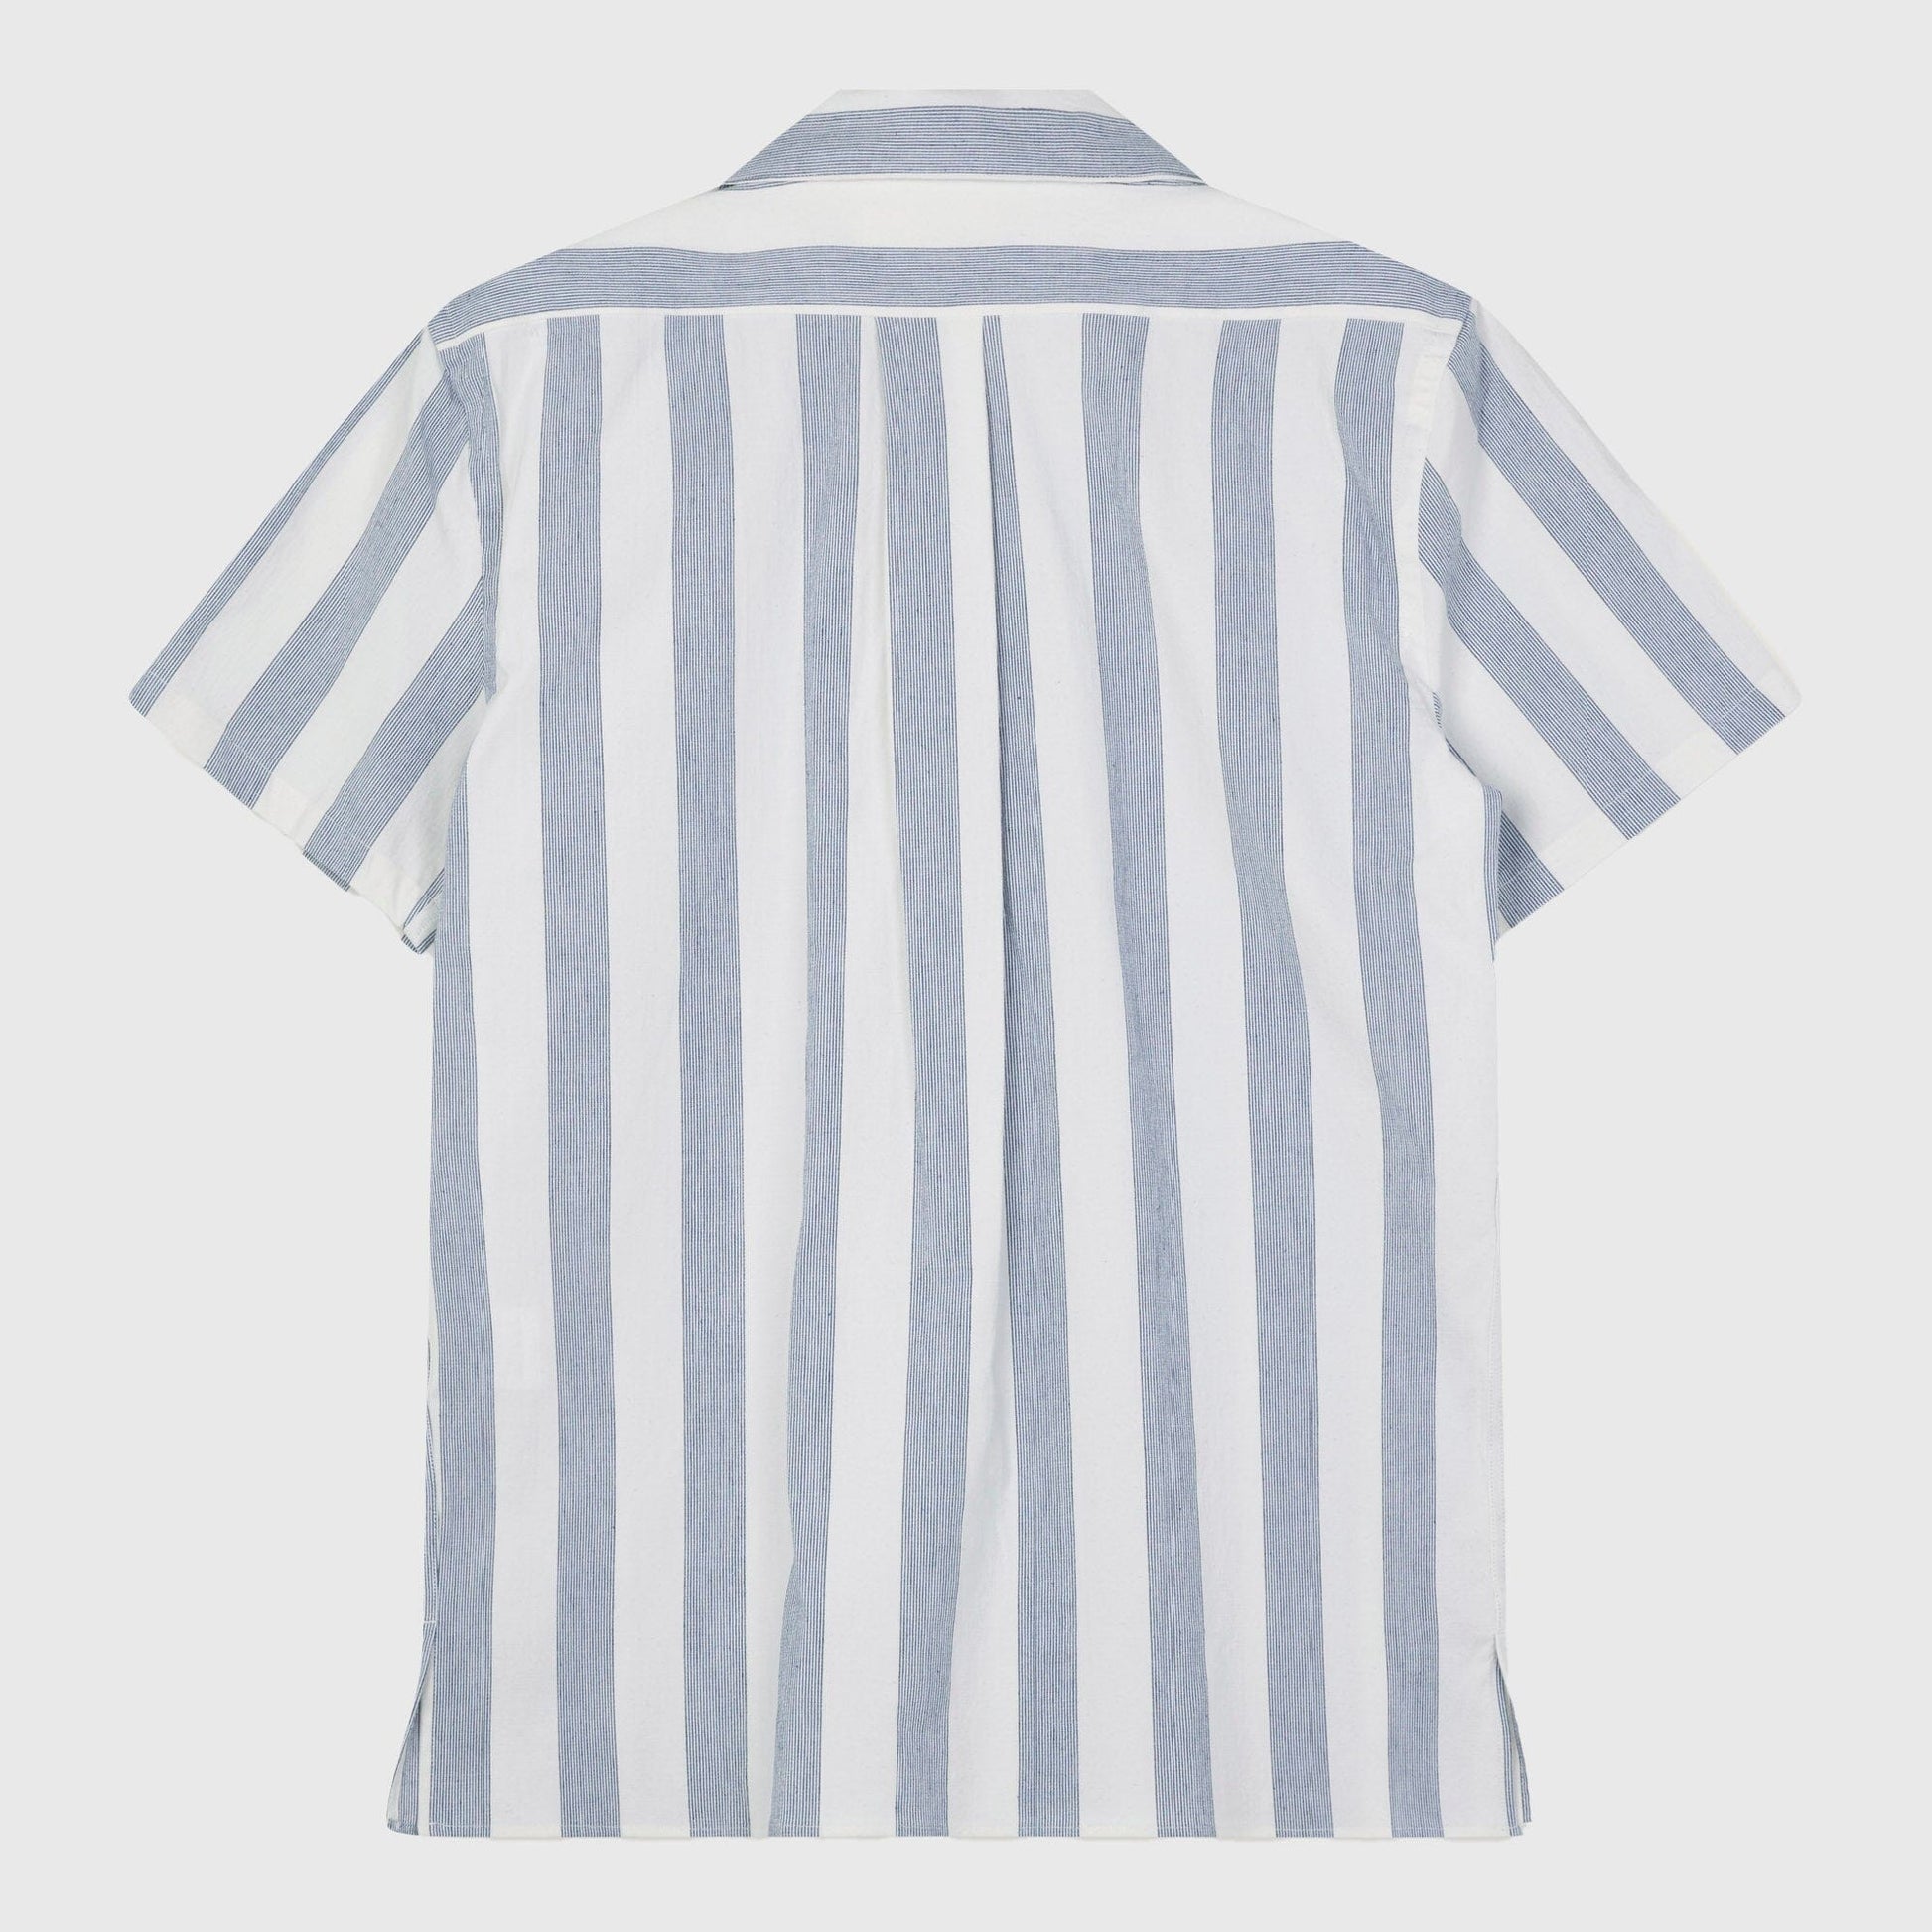 Libertine-Libertine Cave Shirt - Dusty Blue Stripe Shirt Libertine-Libertine 